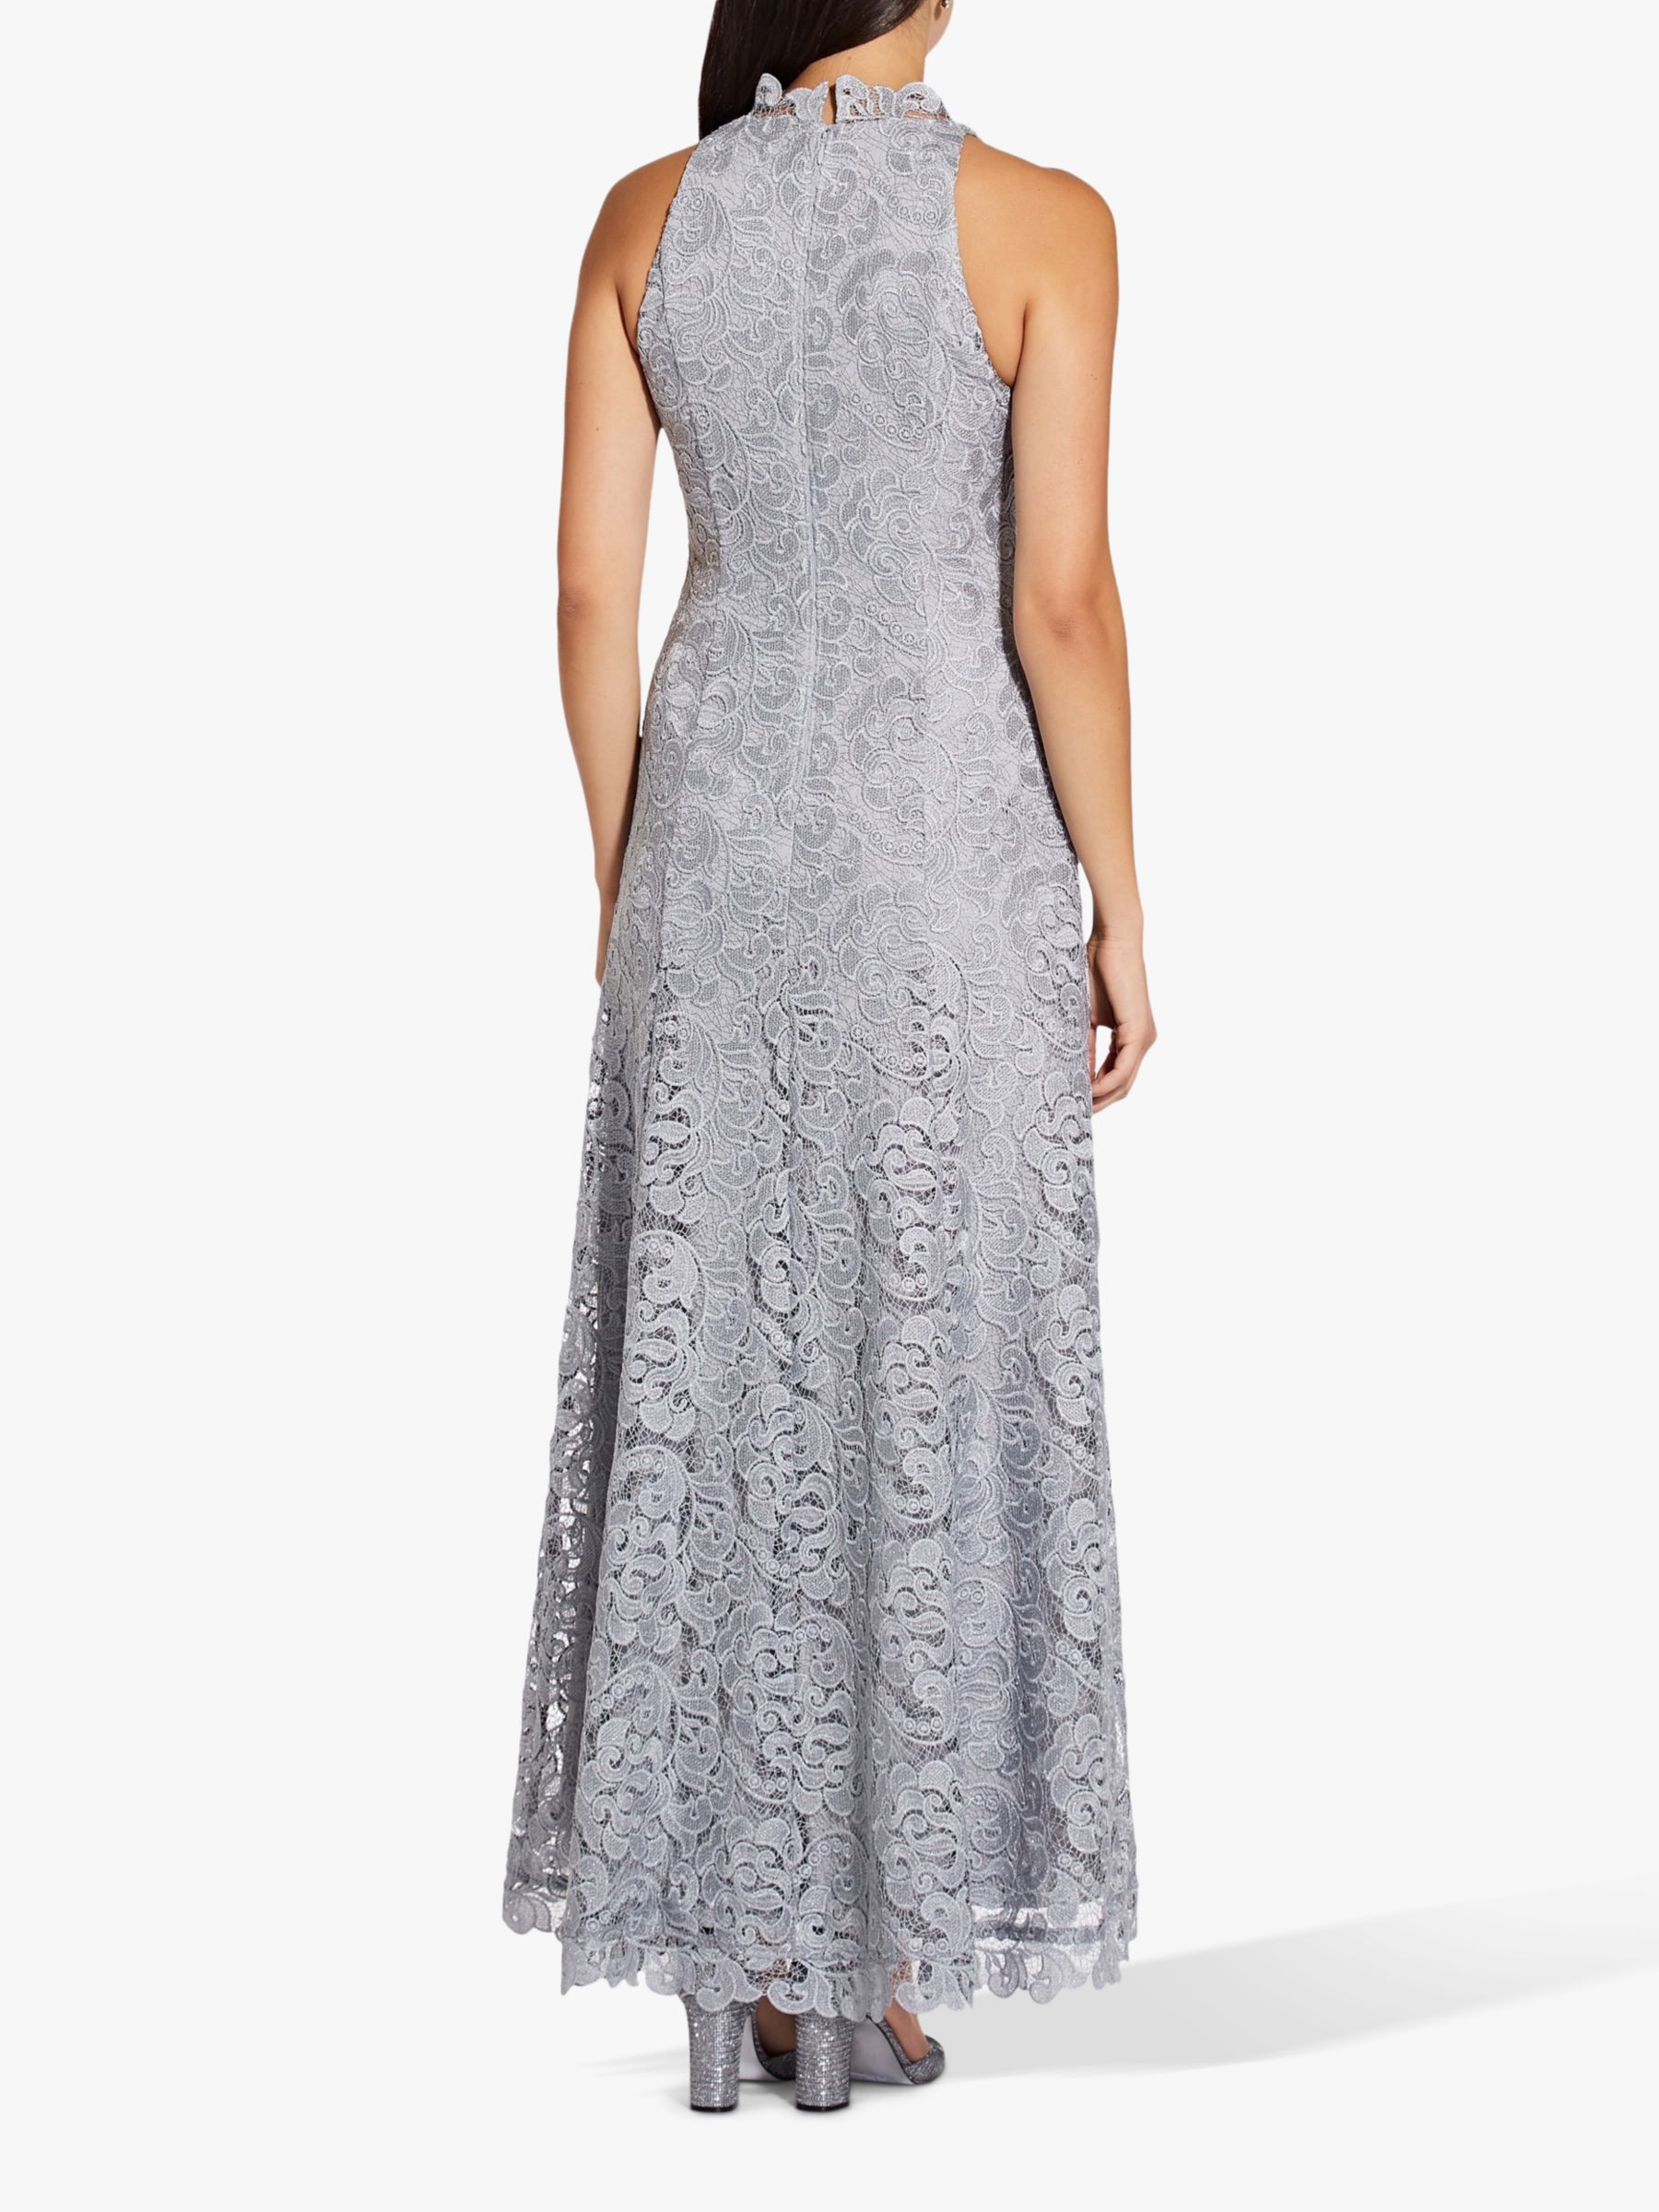 silver lace dress